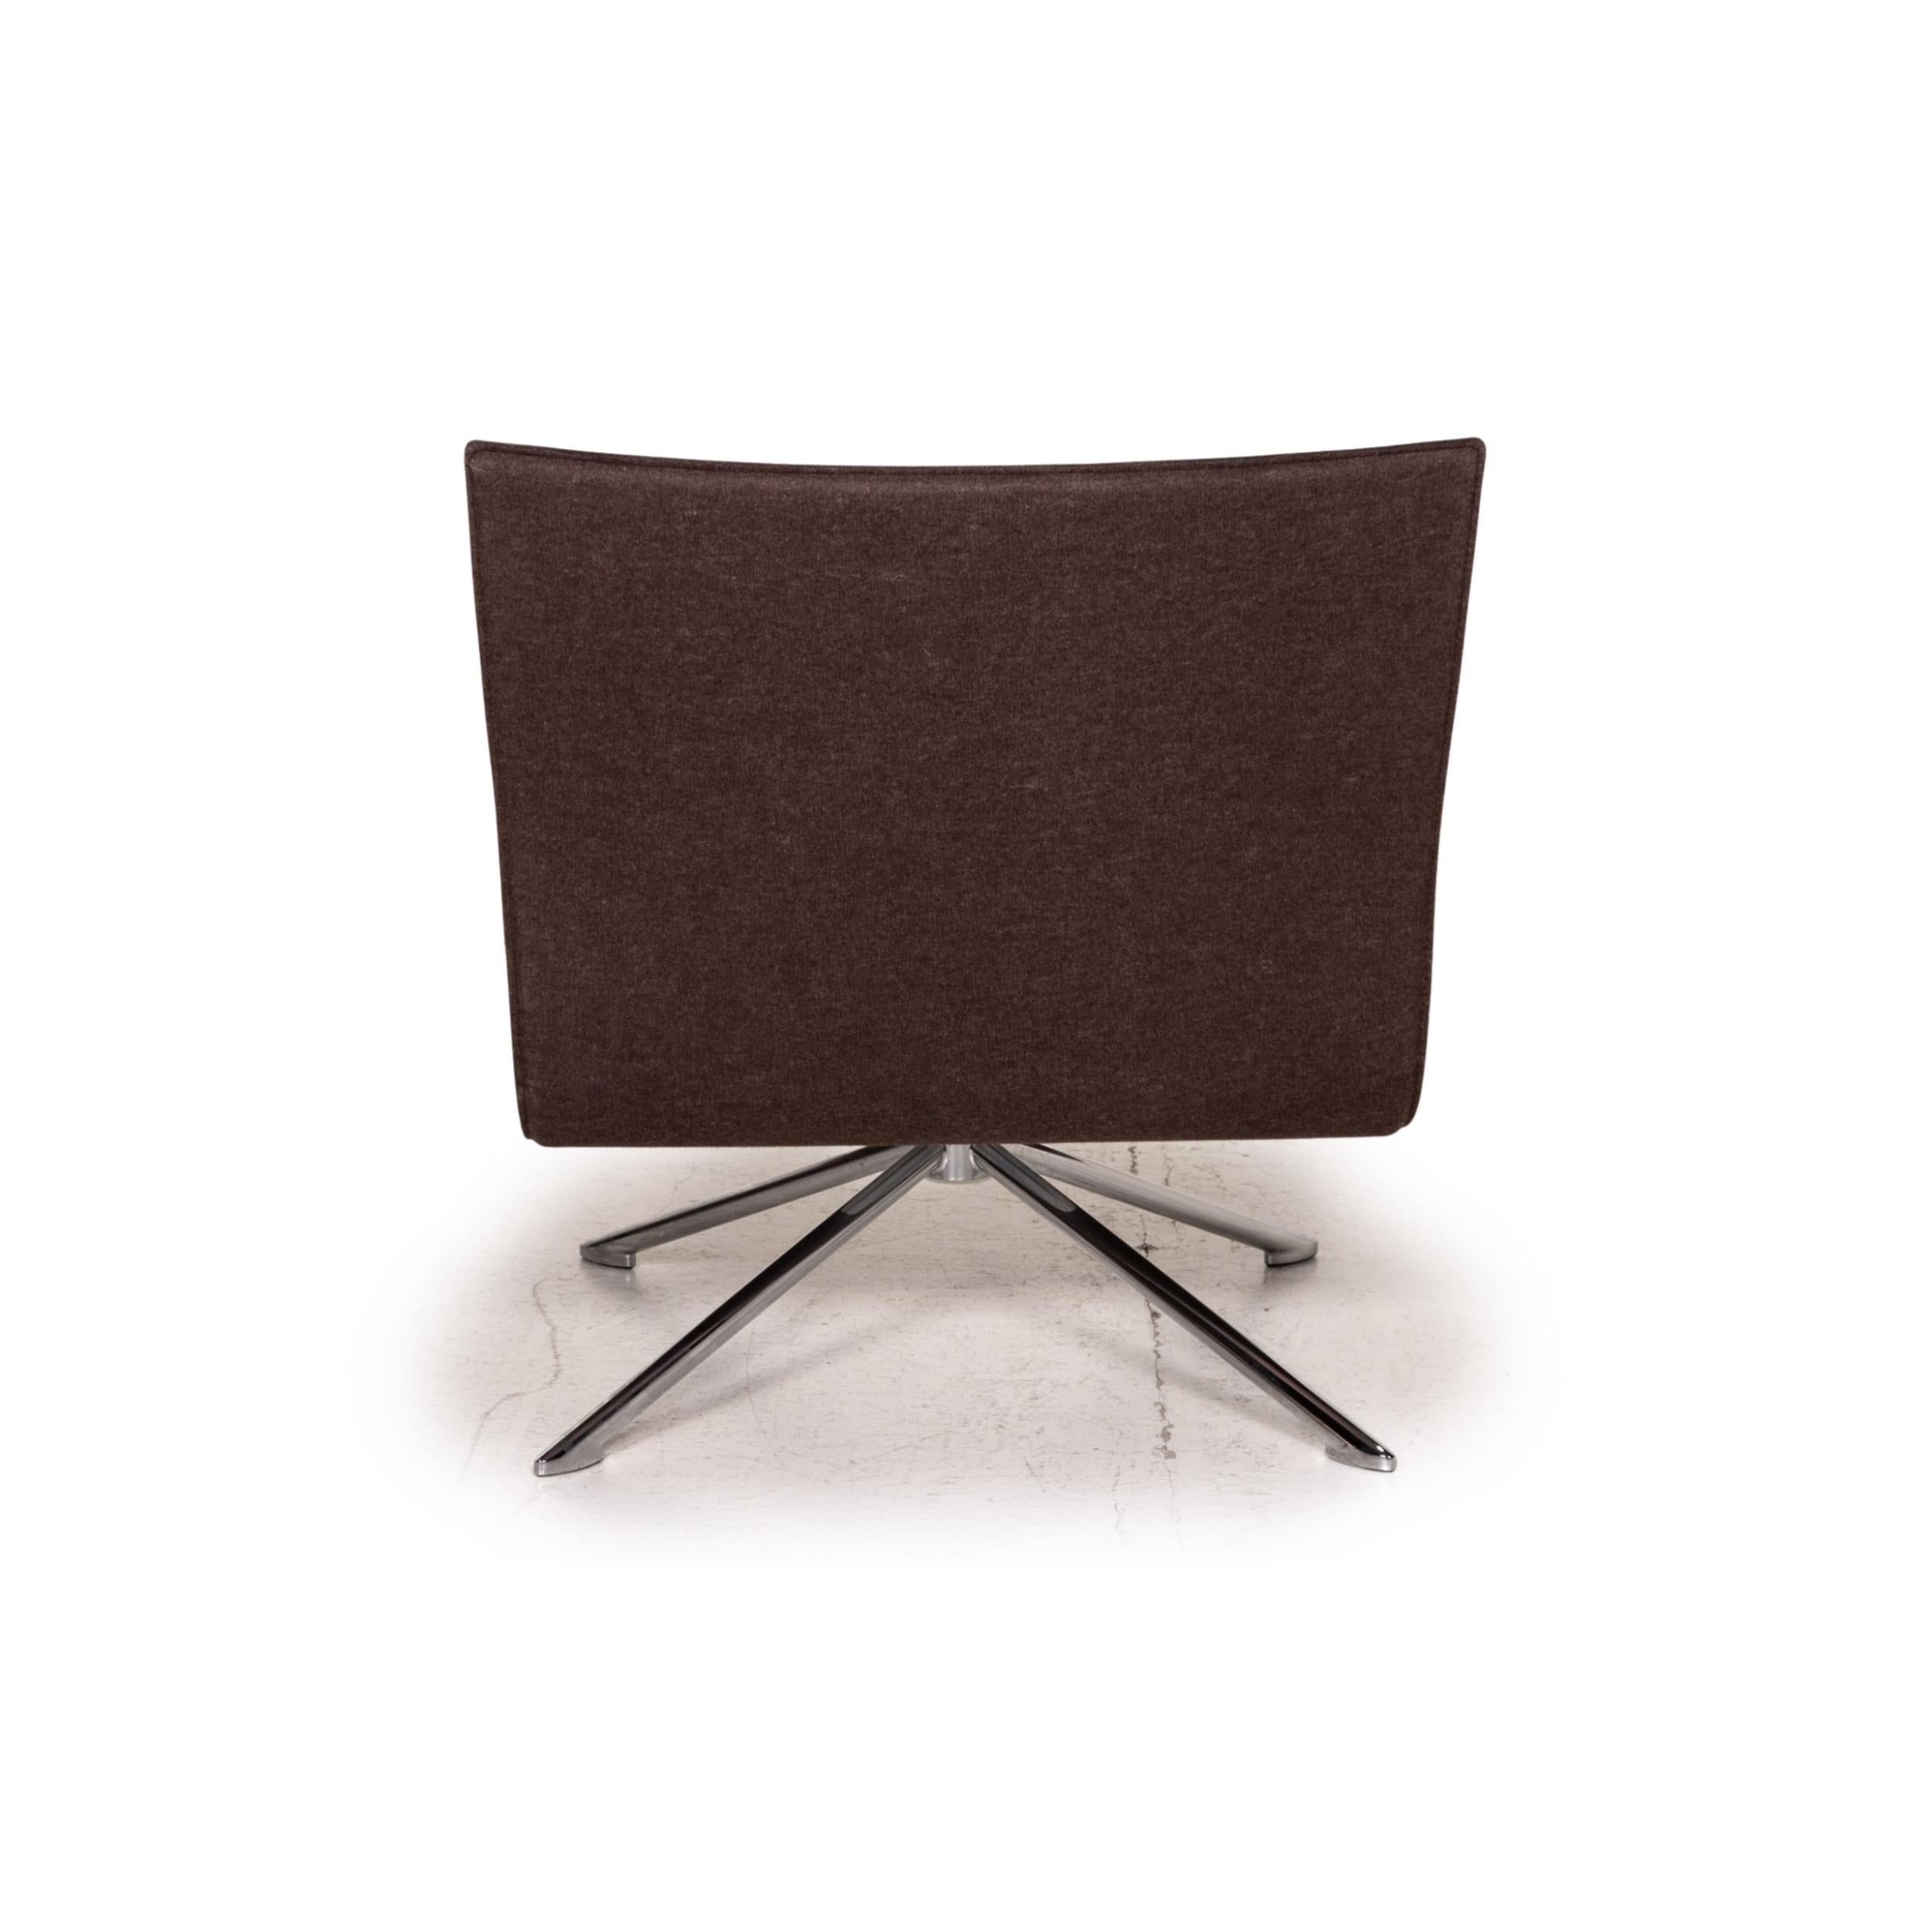 HOB Easychair by VERTIJET for COR Designer Armchair, Felt Fabric, Brown, Molded 2